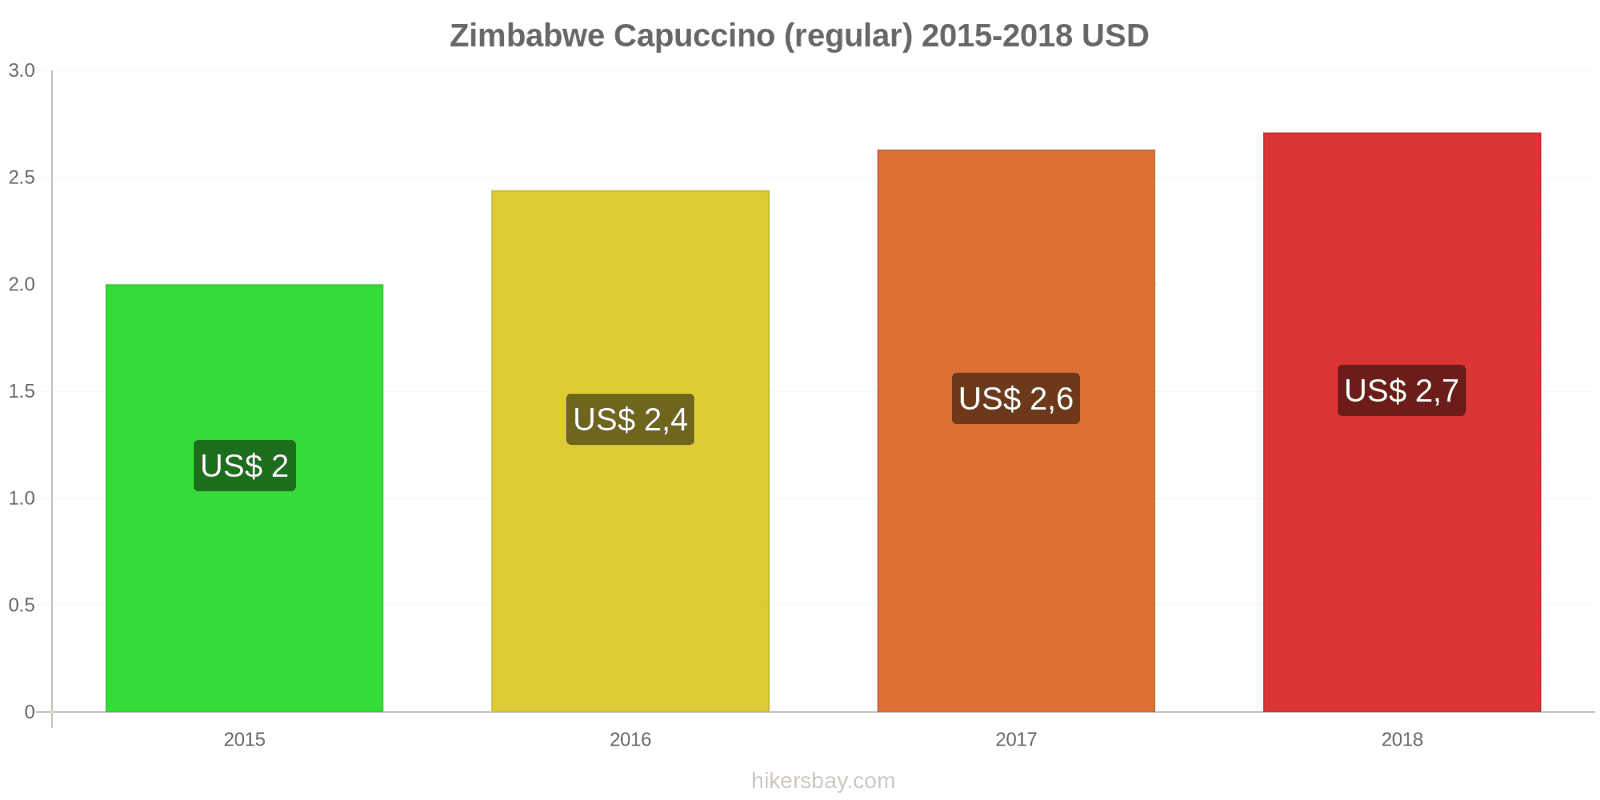 Zimbabwe mudanças de preços Cappuccino hikersbay.com